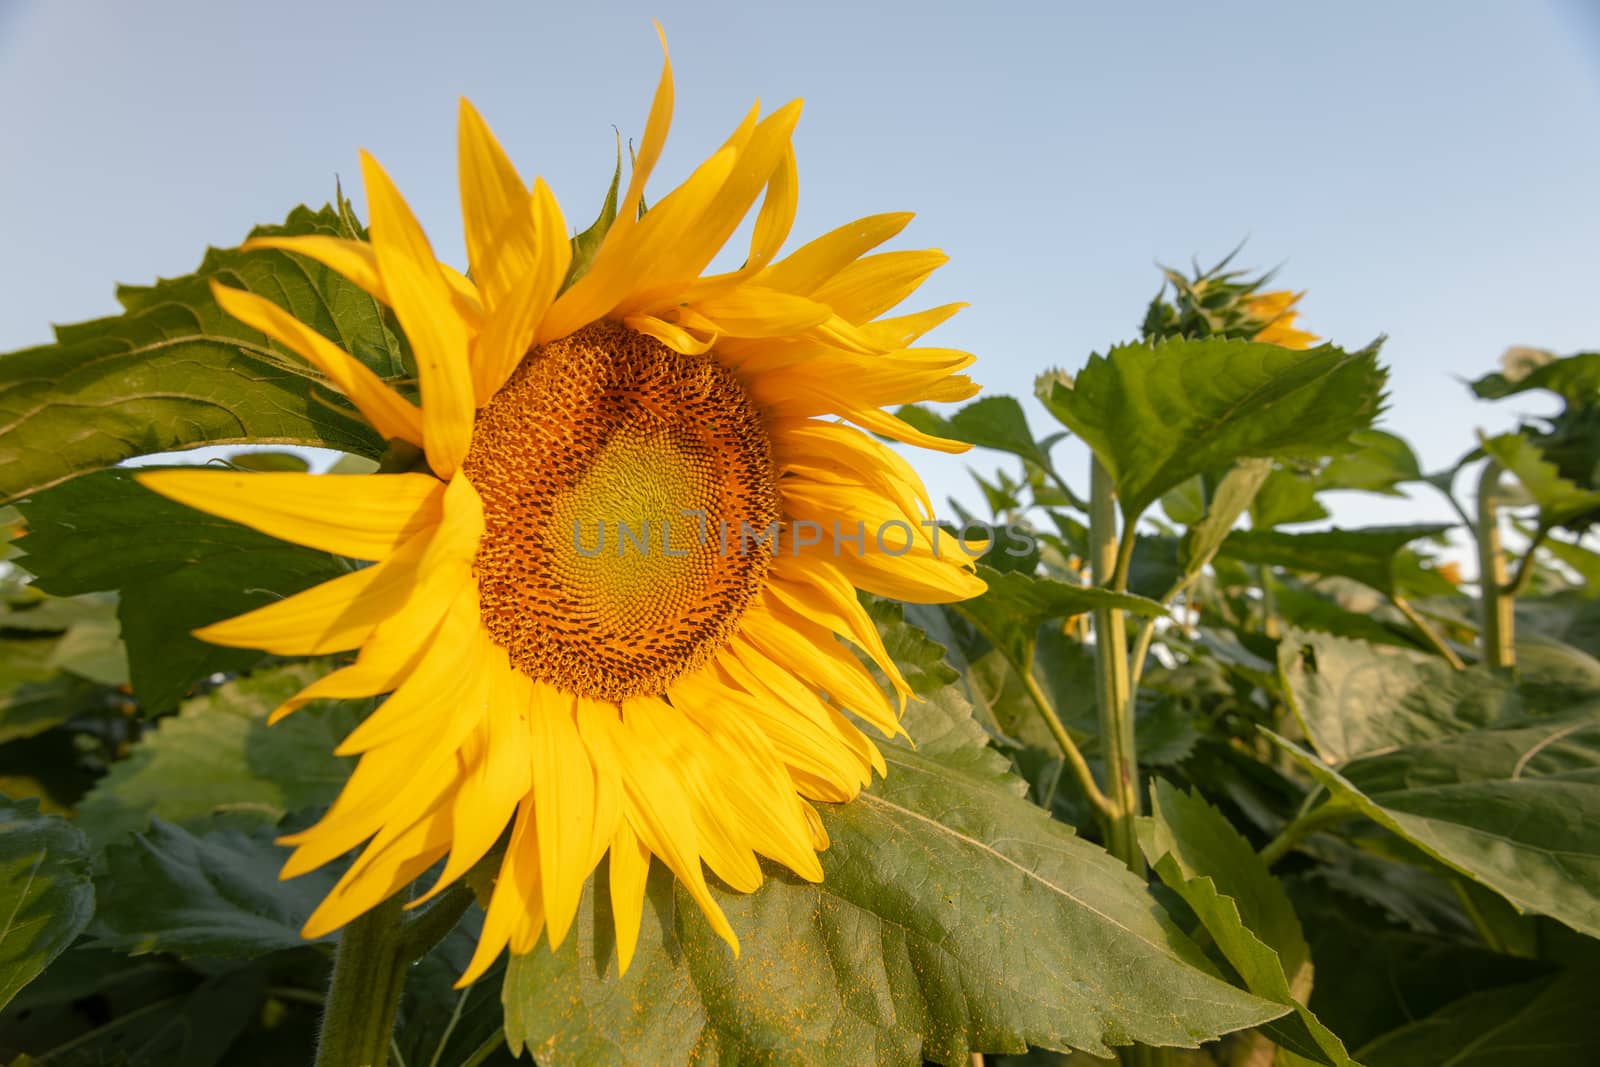 Sunflower field in morning sunlight, close up